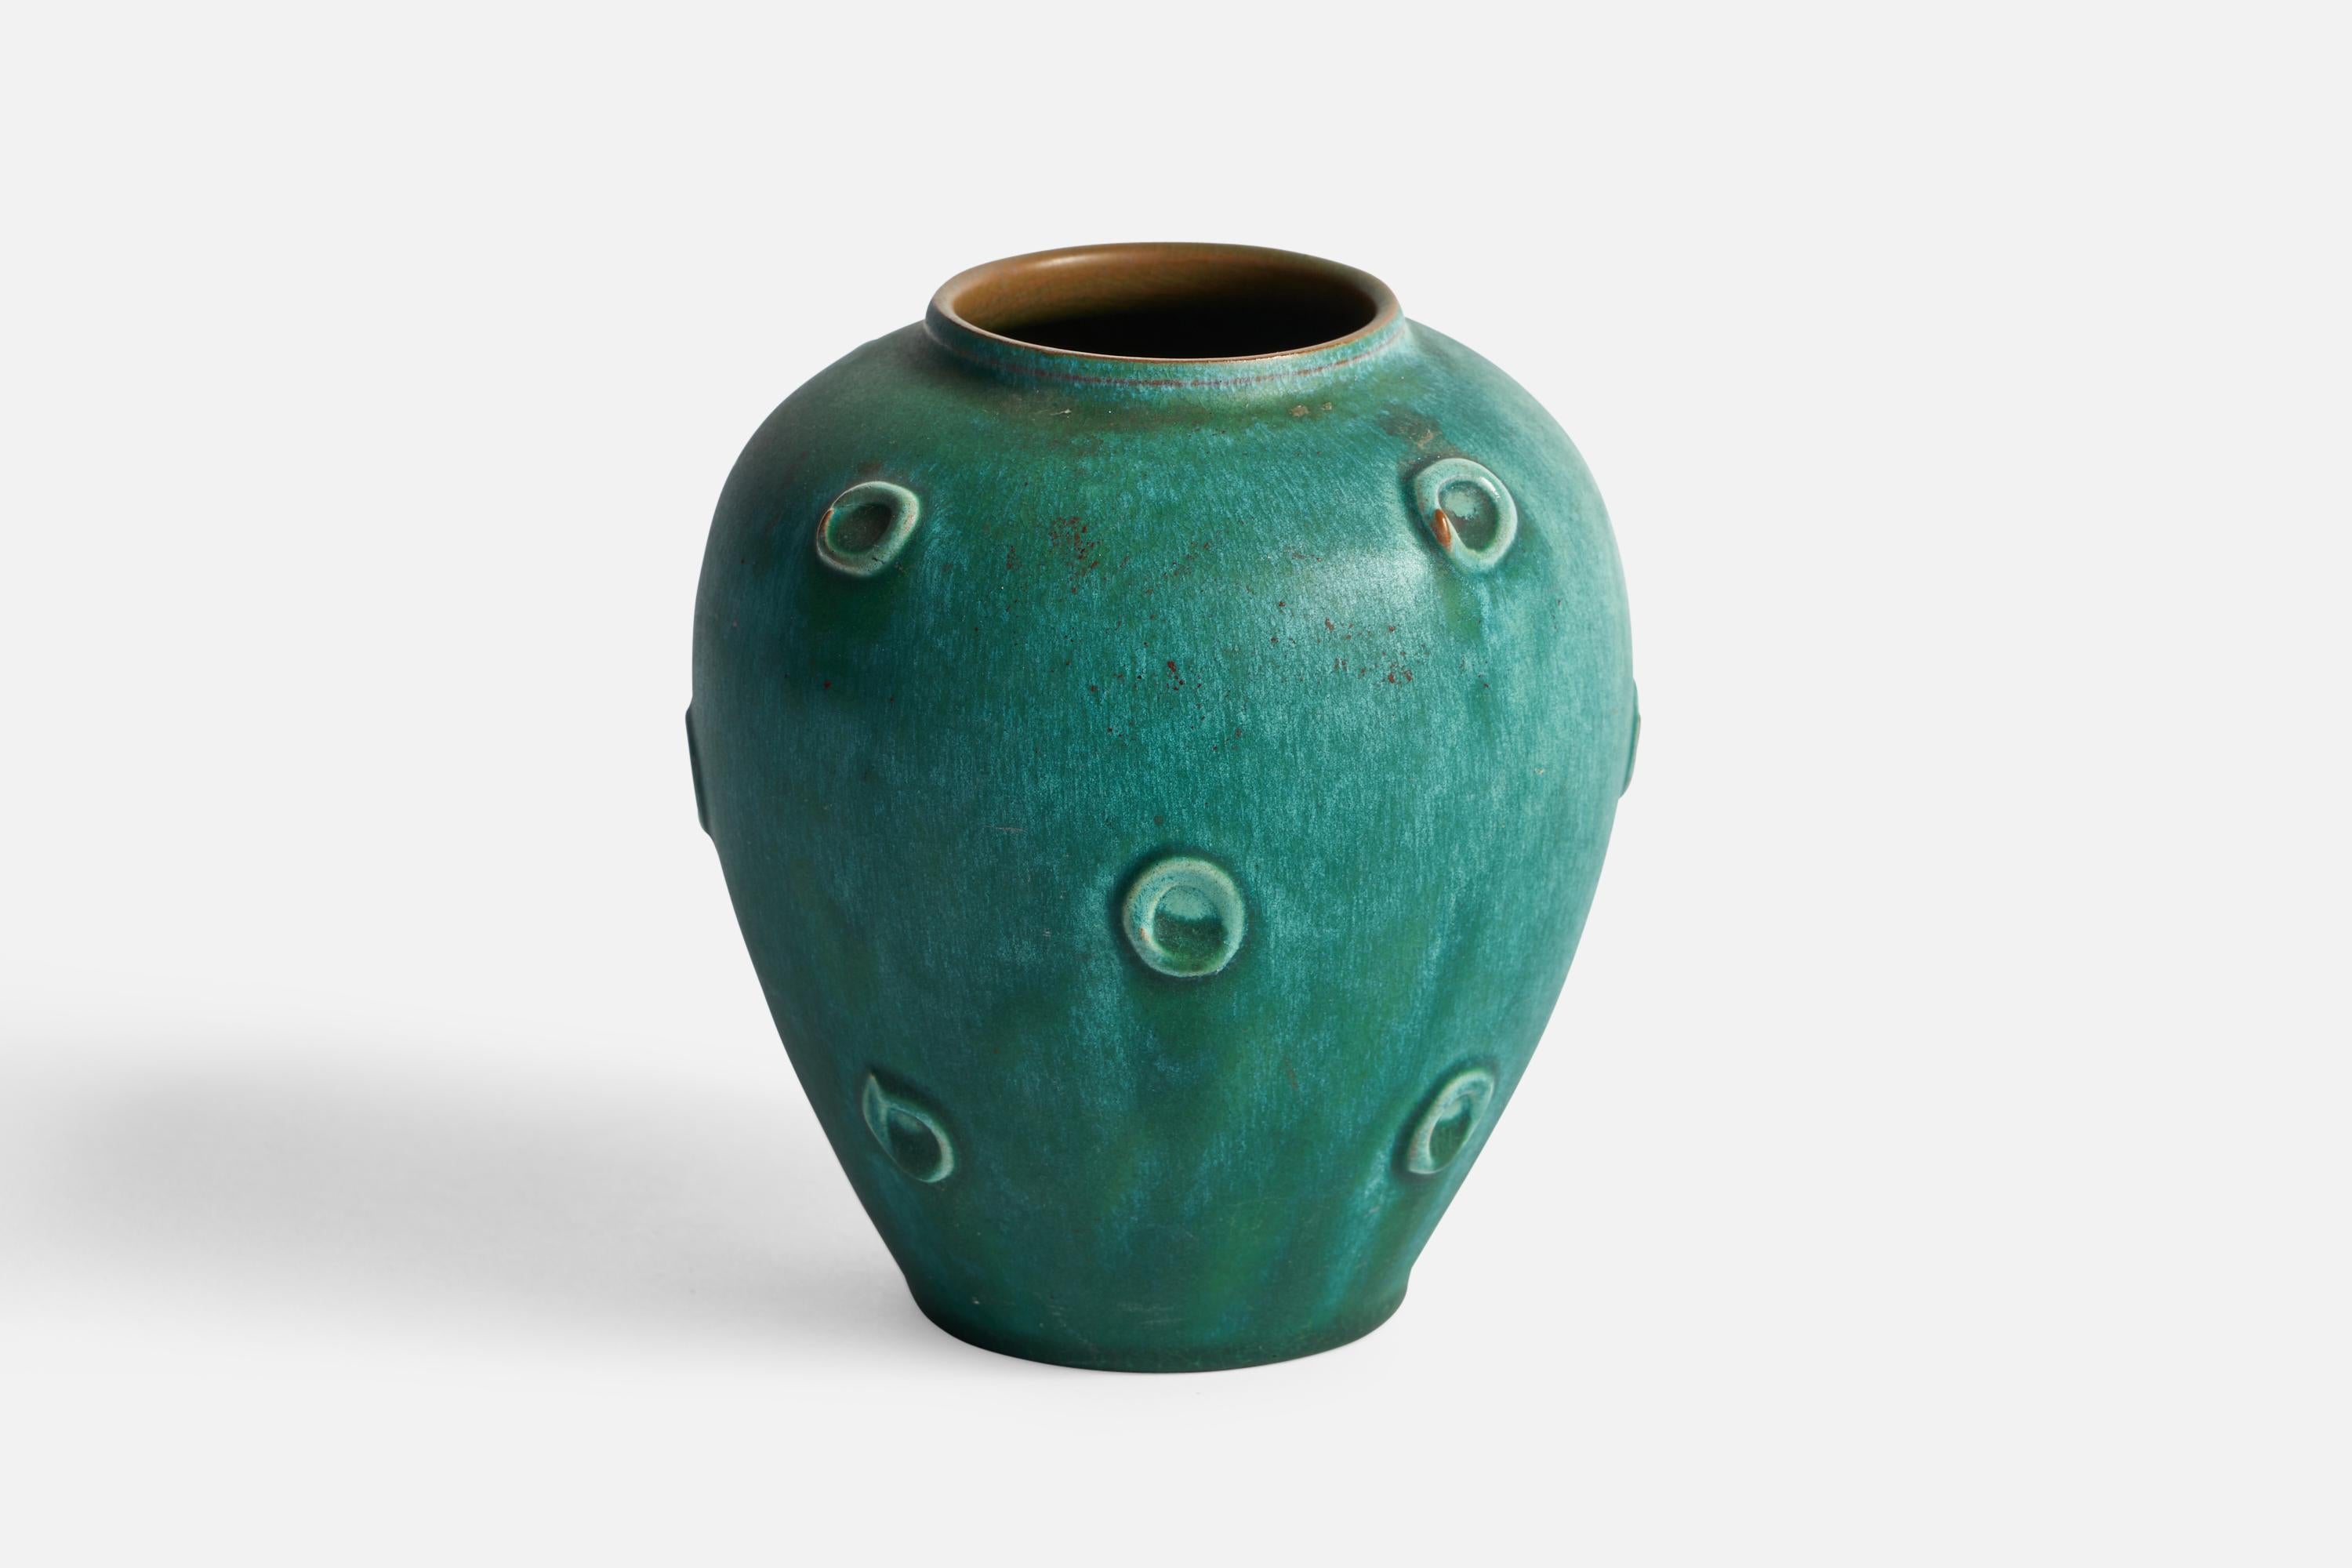 A green-glazed ceramic vase designed and produced in Sweden, c. 1950s.